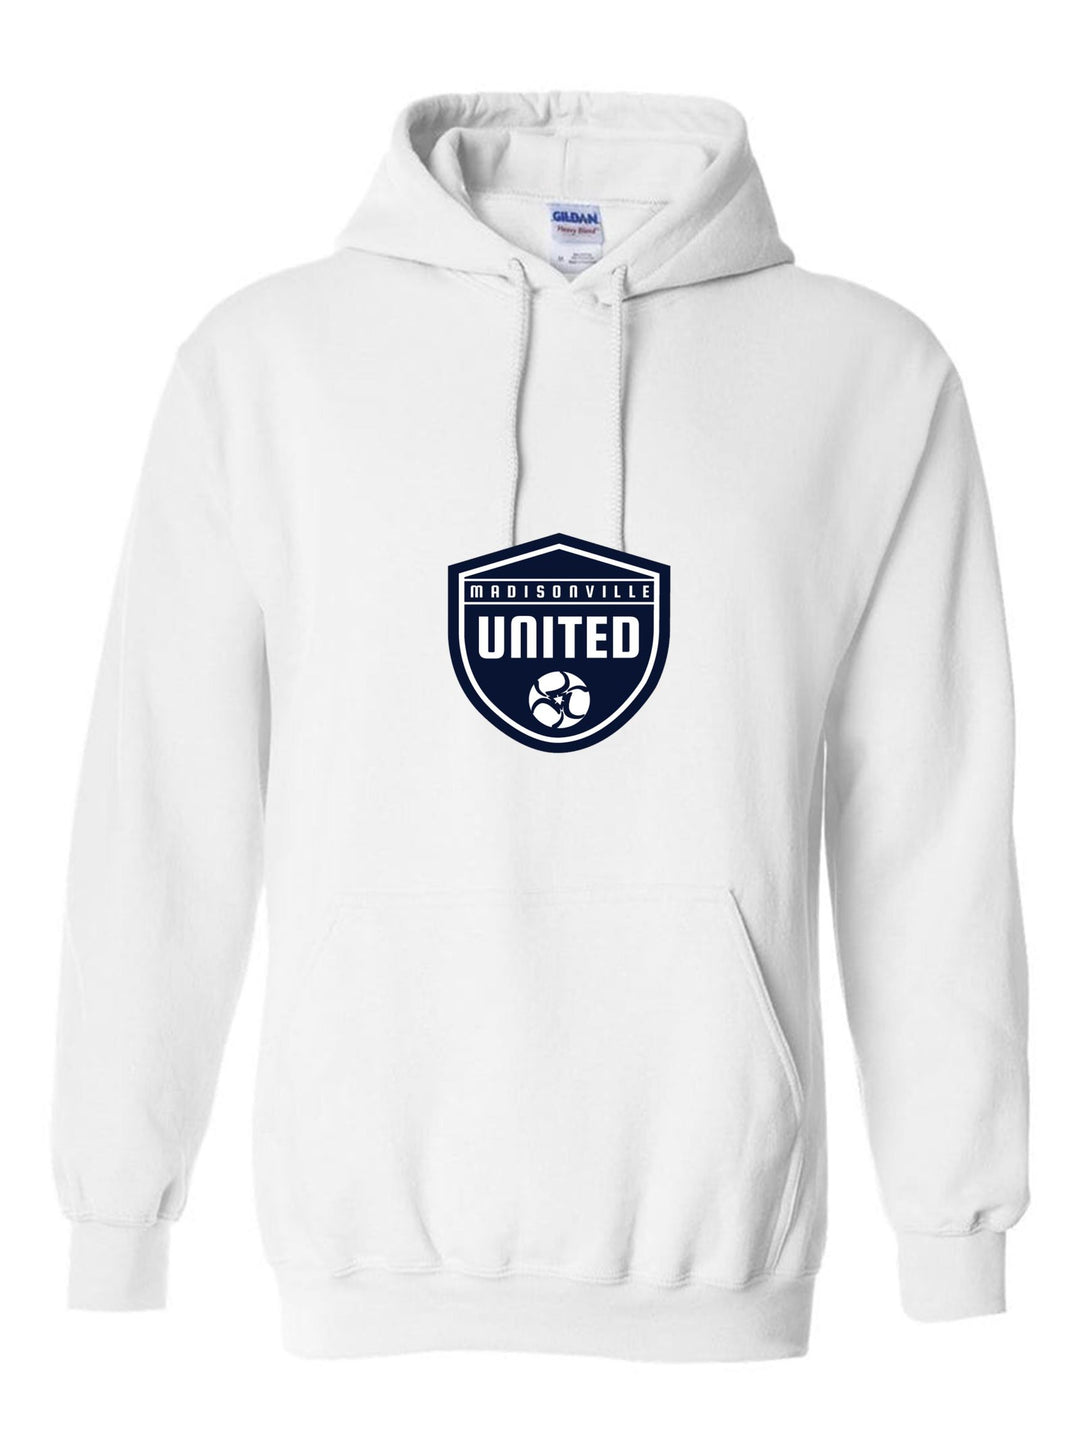 Madidsonville United Hoody - Black, Grey, Navy or White Madisonville United Spiritwear MENS 2XL WHITE - Third Coast Soccer